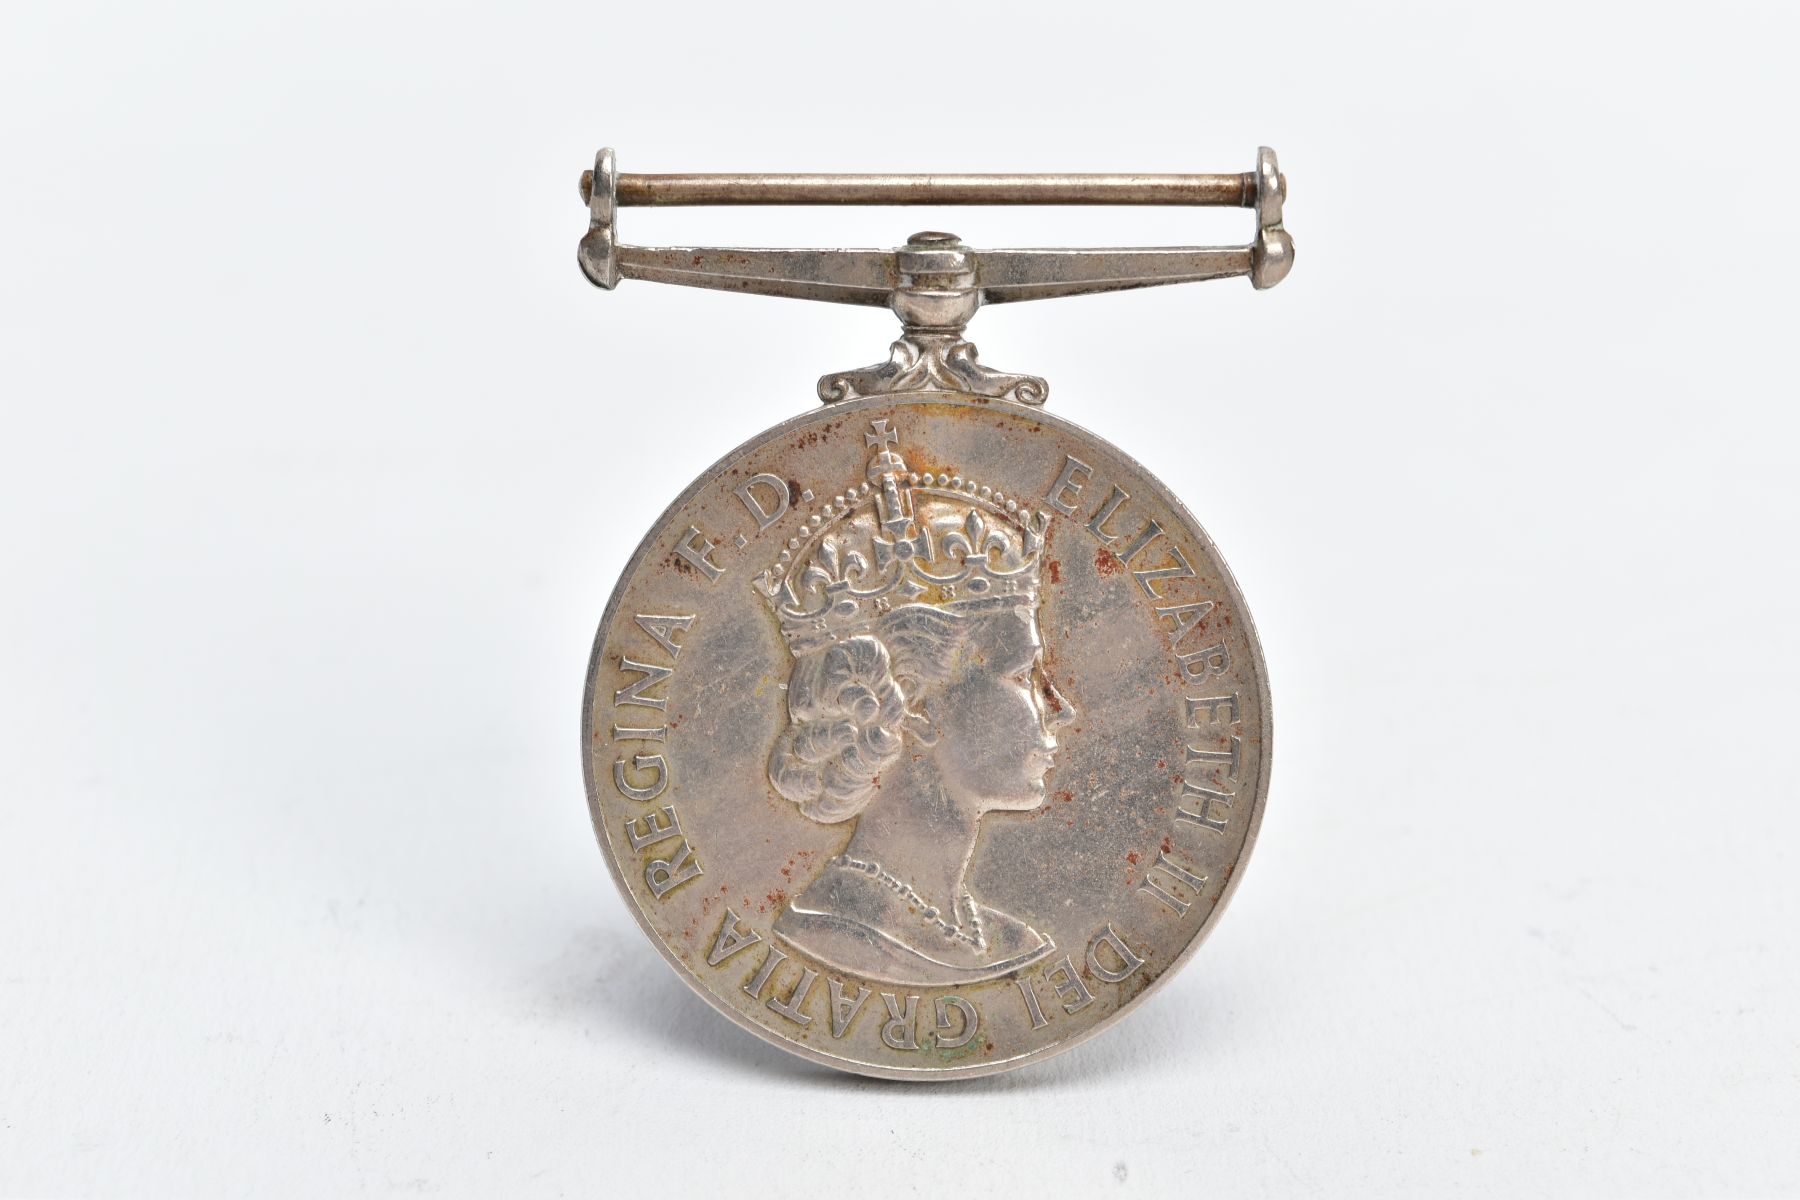 A POLICE SERVICE MEDAL, Elizabeth Dei Gratia Regina F.D, 'For Exemplary Police Service' medal,